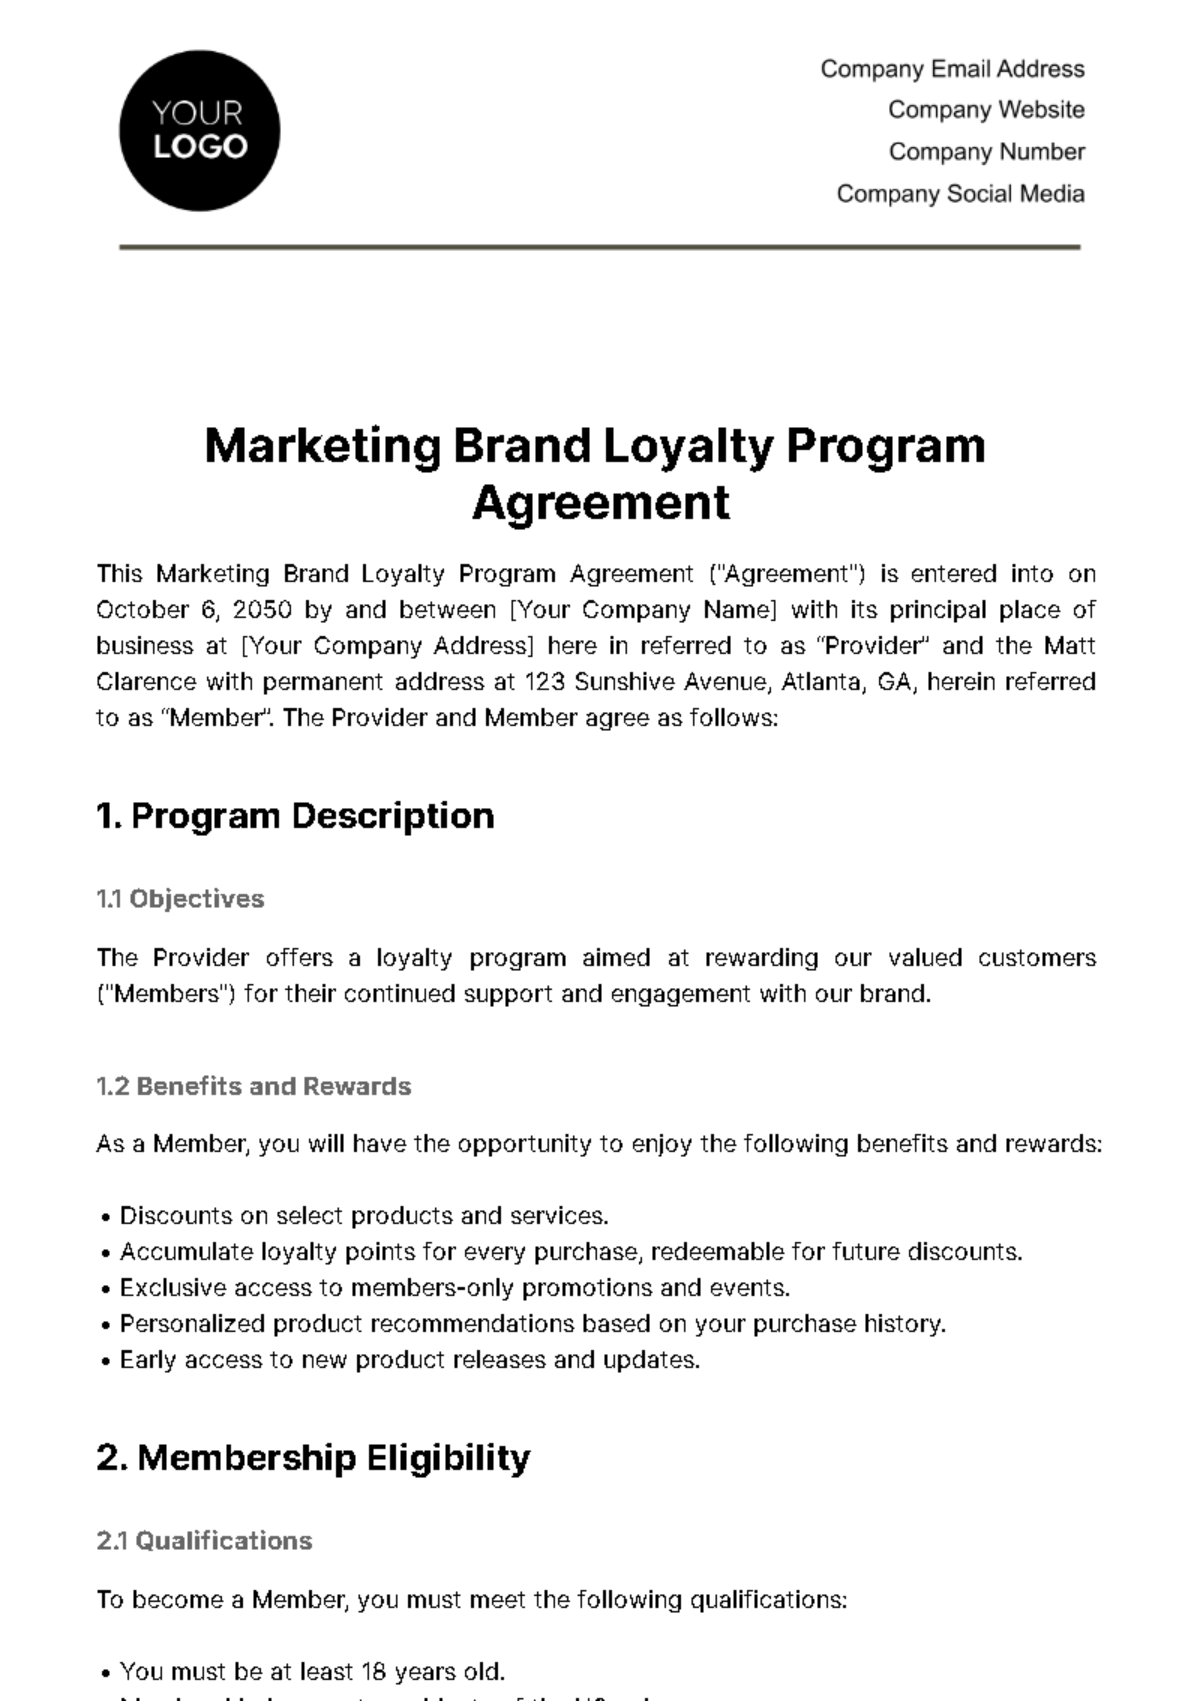 Free Marketing Brand Loyalty Program Agreement Template